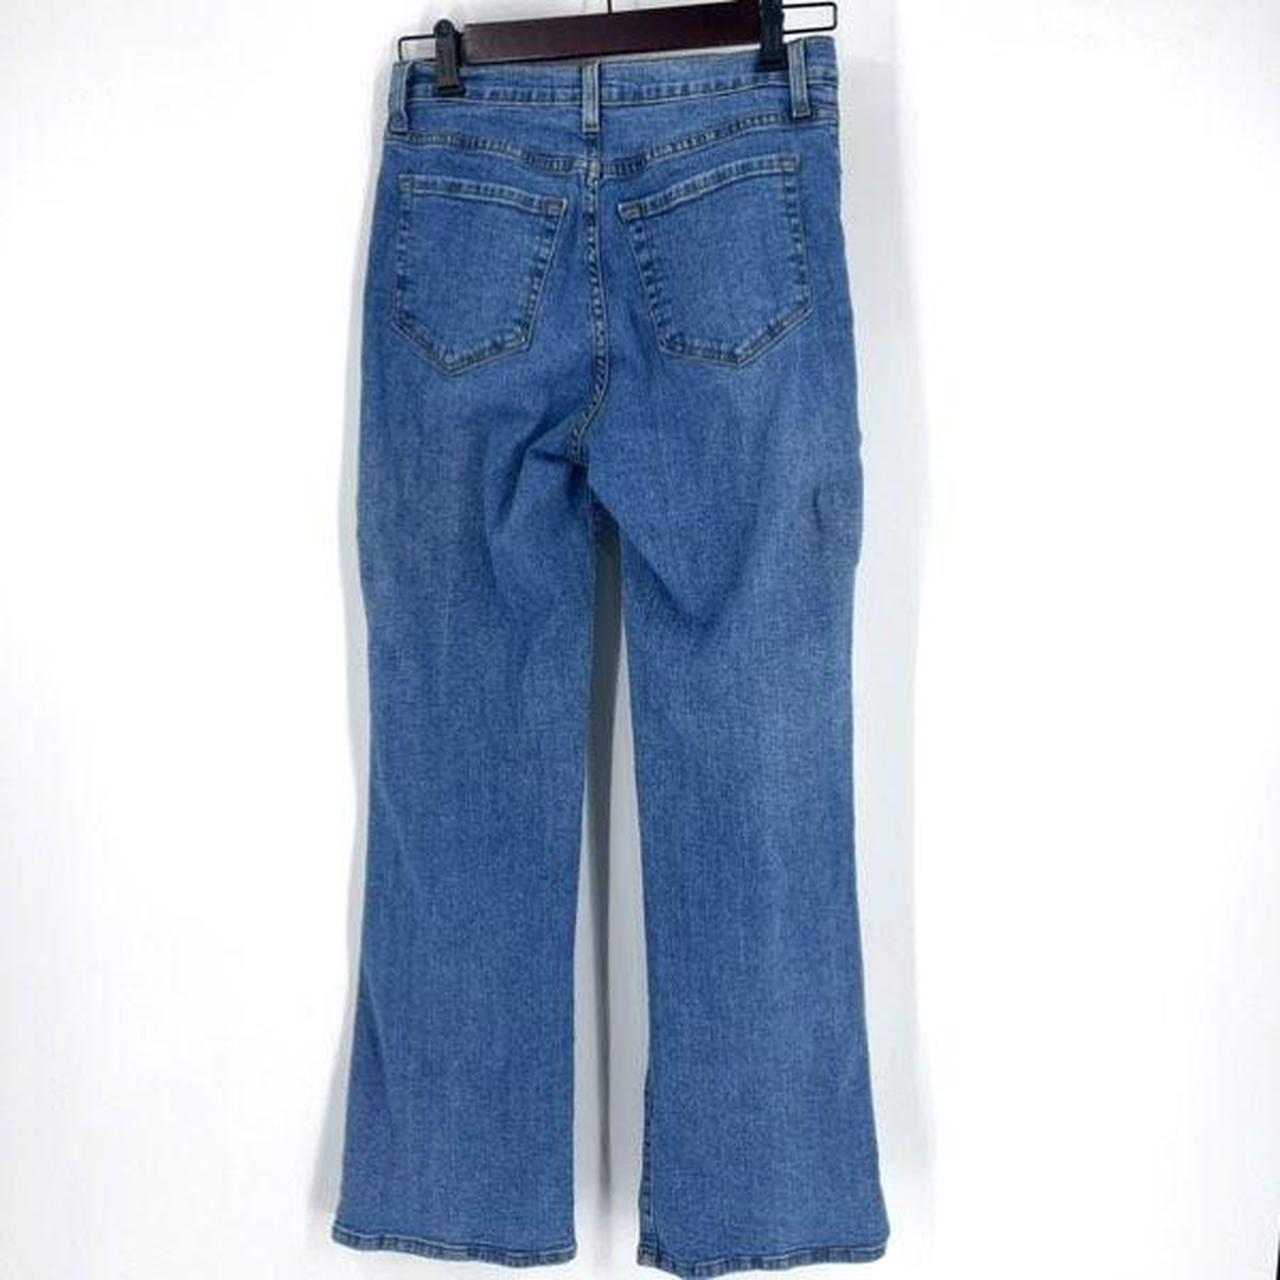 NYDJ Tummy Tuck Jeans High Rise Flared Wide Leg - Depop